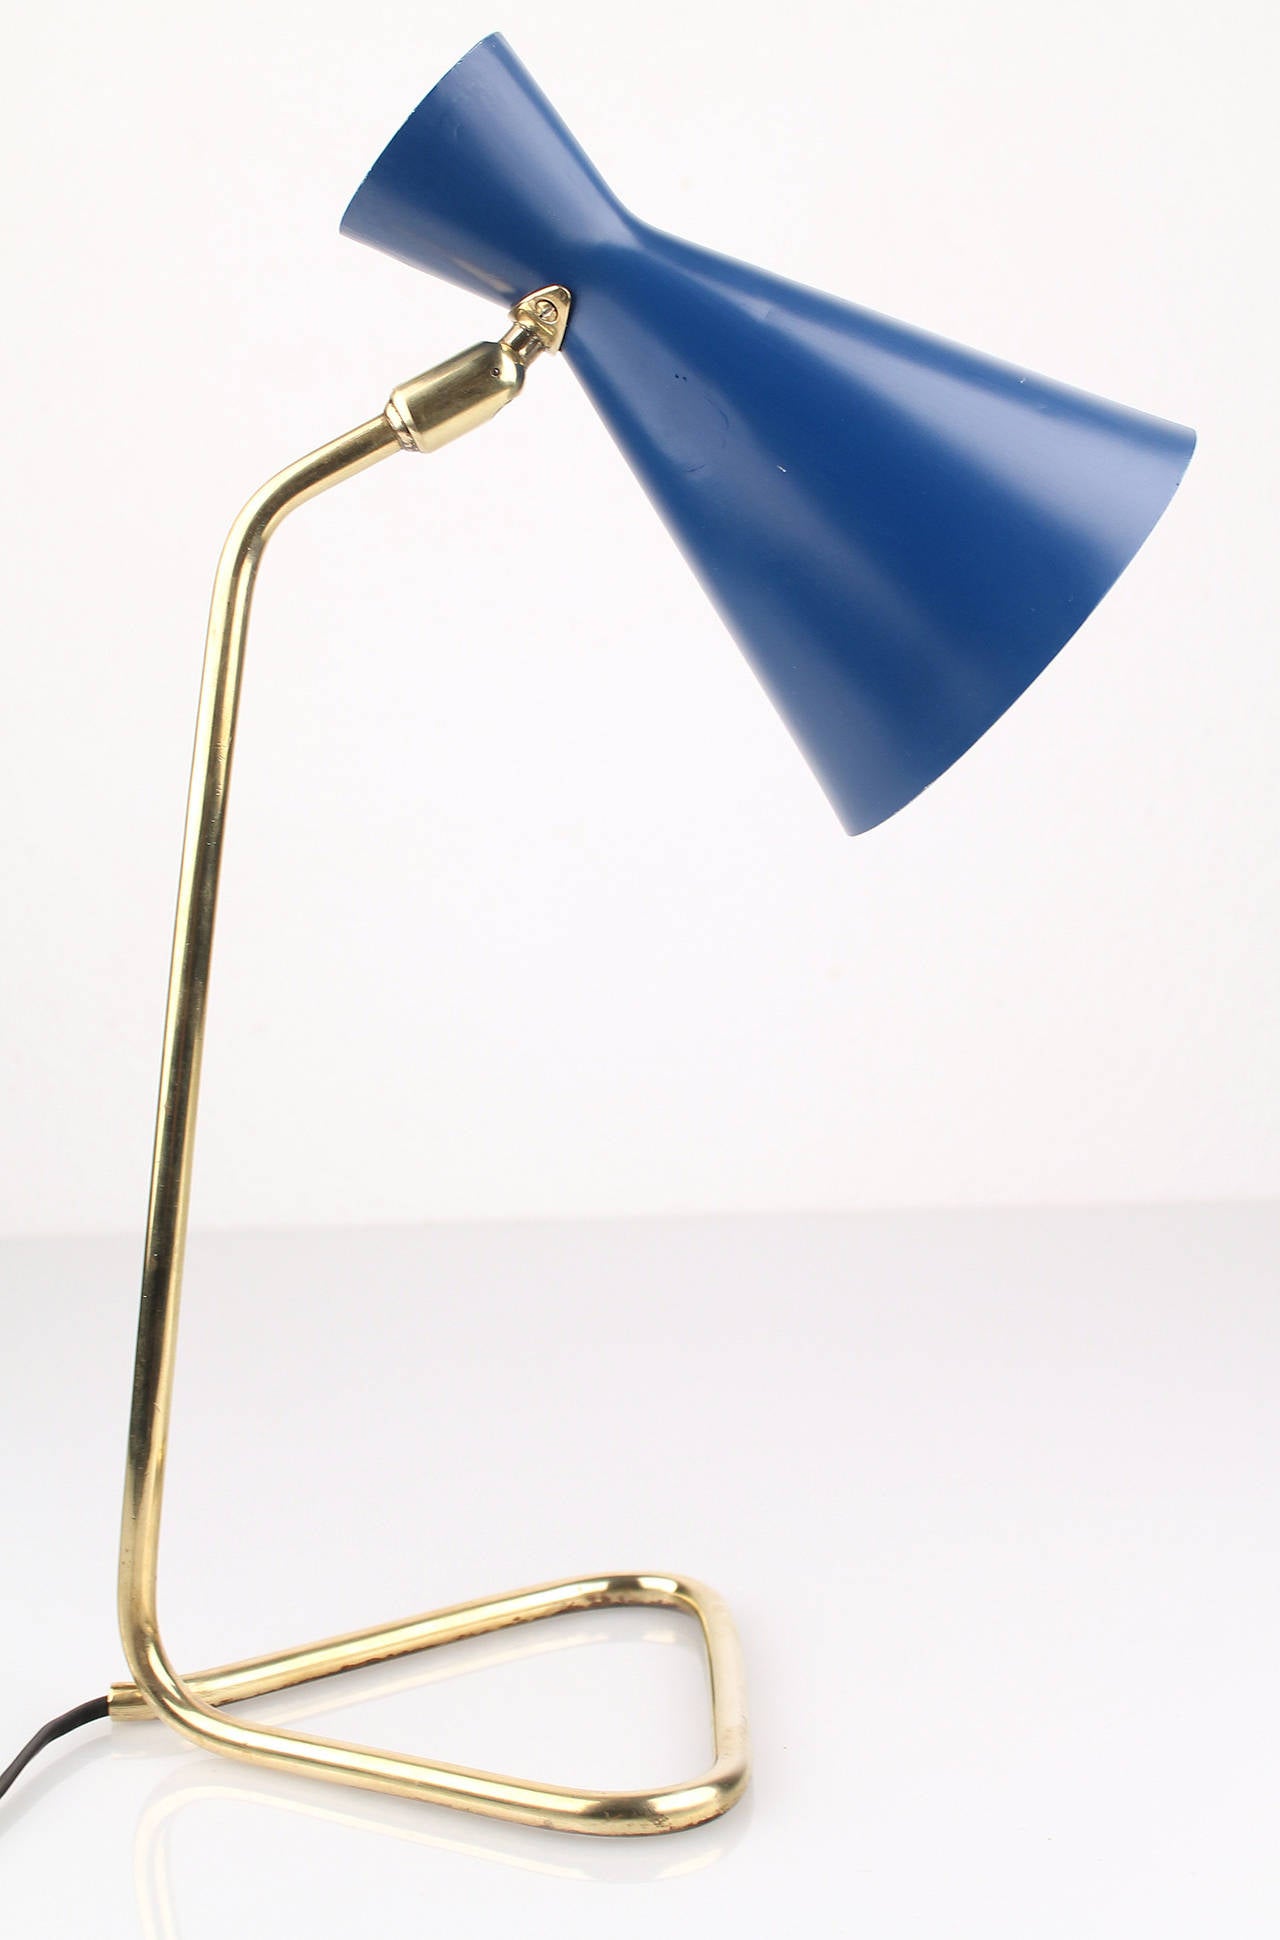 Stilnovo desk lamp, adjustable blue enameled shade, single frame brass loop base

 1 standard bulb up to 60 watts